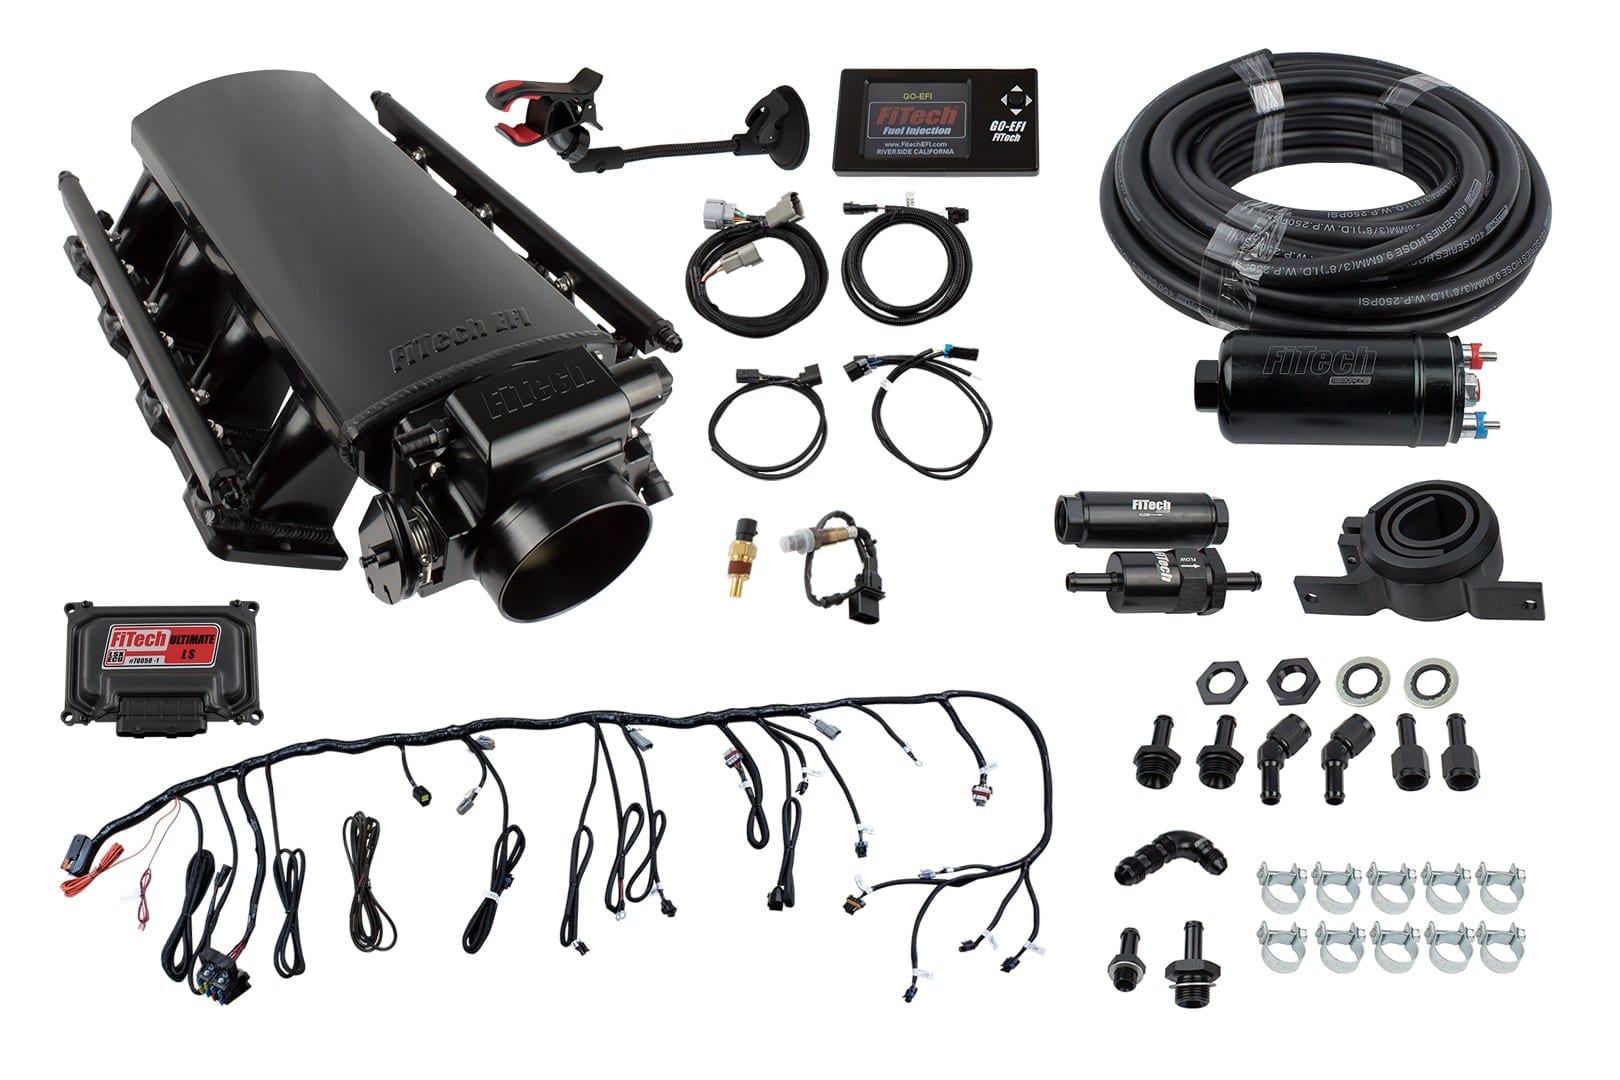 FiTech 71013 Ultimate LS Kit (750 HP, No Transmission Control, Inline Fuel Pump)-for LS3/L92